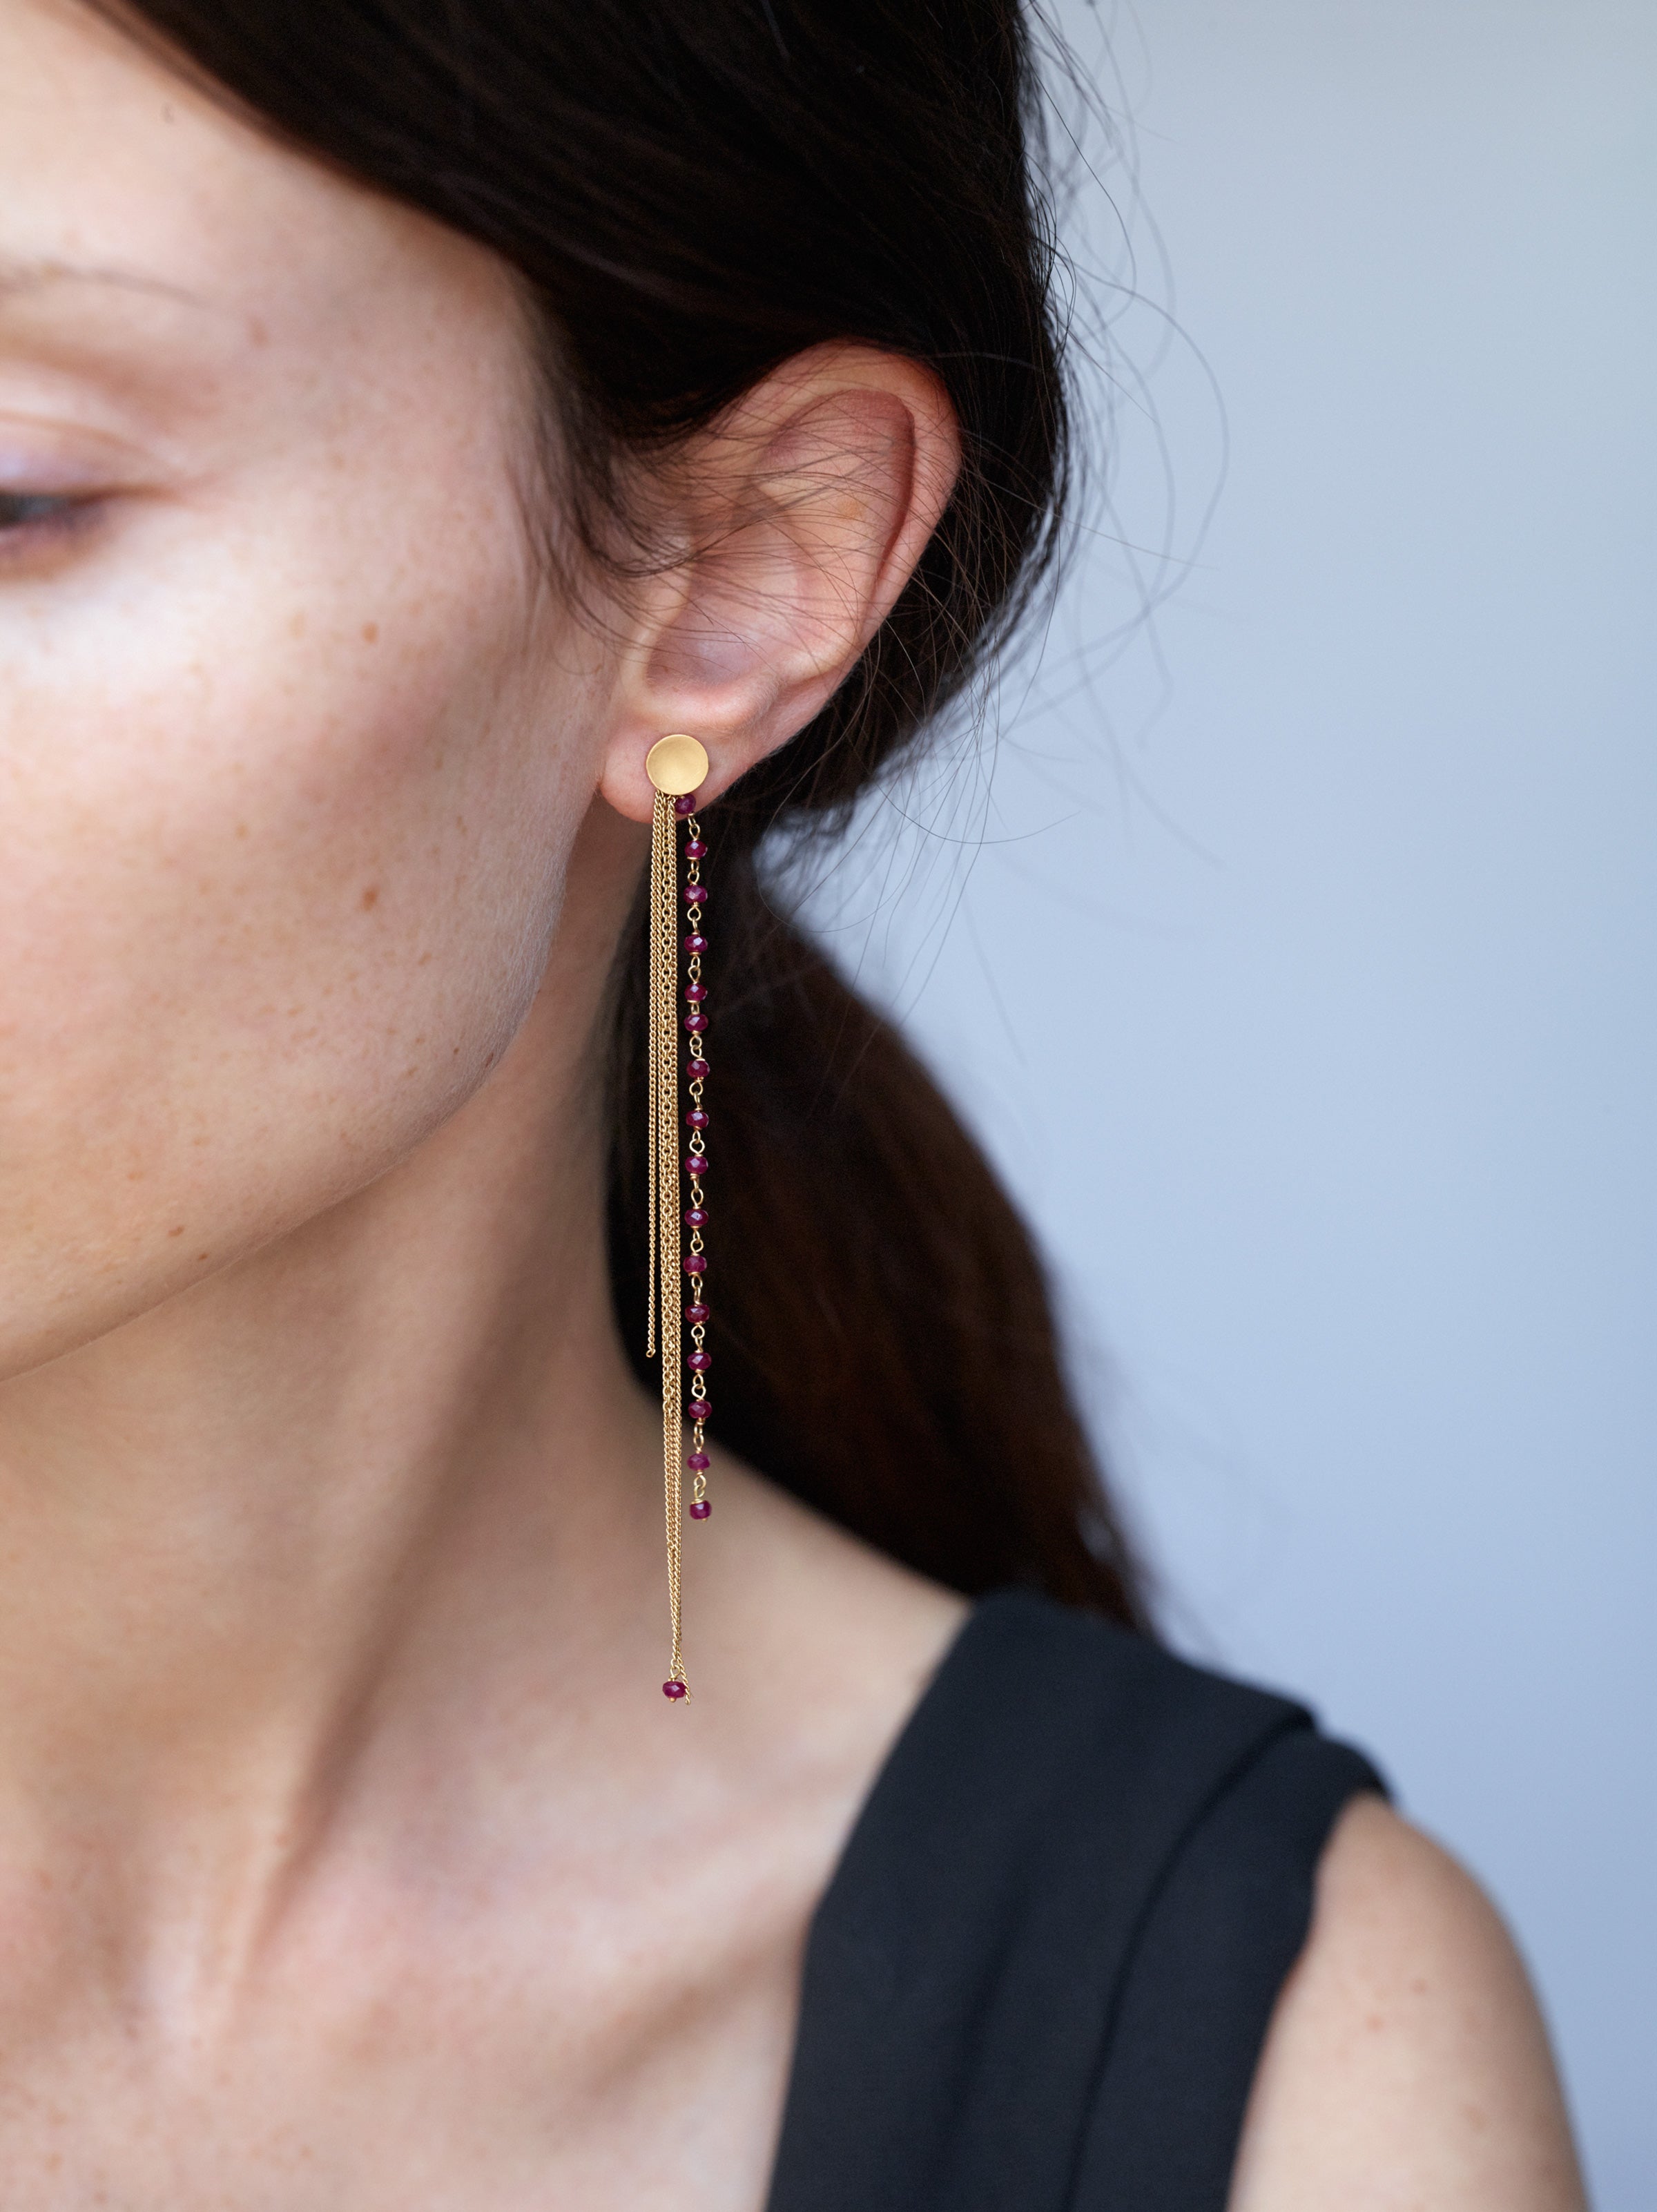 18KT fringe earrings in yellow gold with rubies worn by a female ear - Frange Rubino